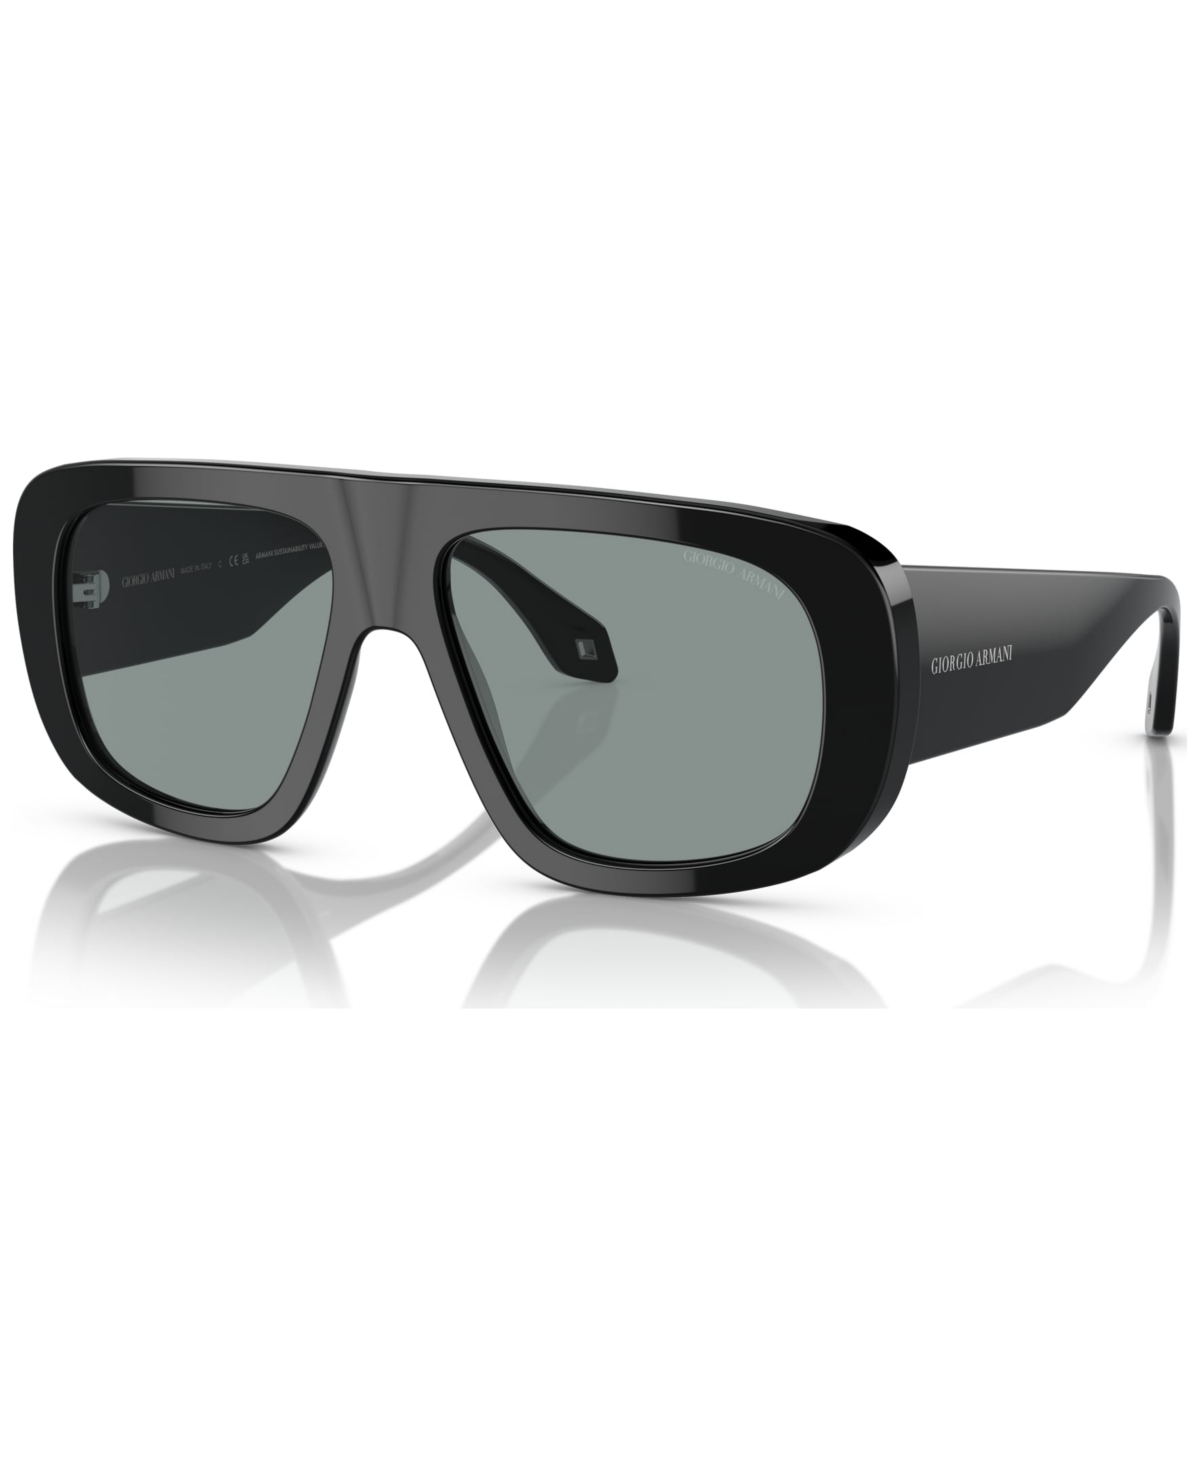 Men's Sunglasses, AR818356-x 56 - Striped Blue